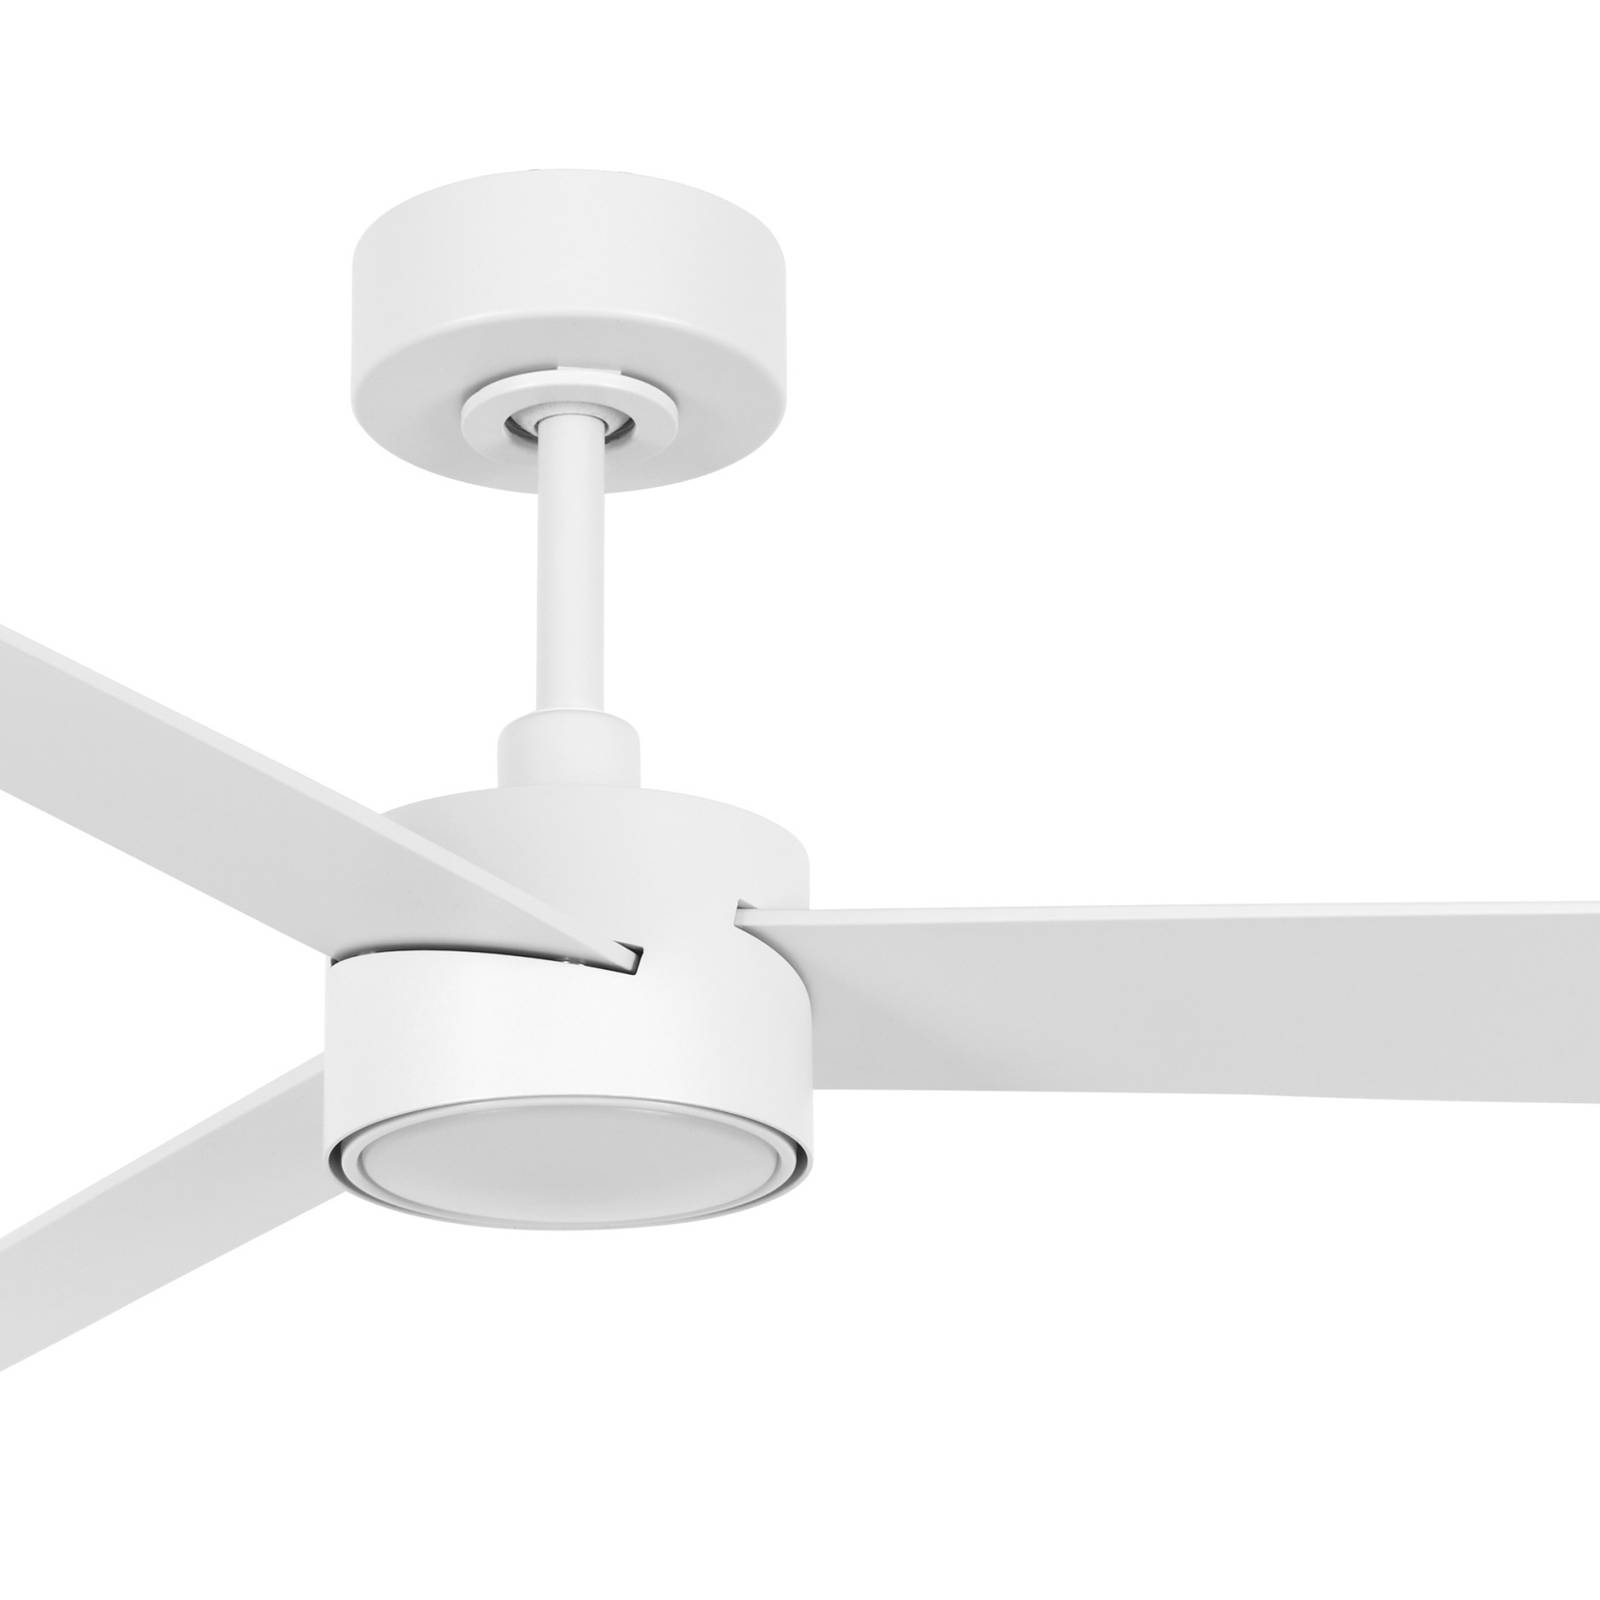 Image of Beacon Lighting Ventilateur de plafond LED Climate IV blanc 9333509192763